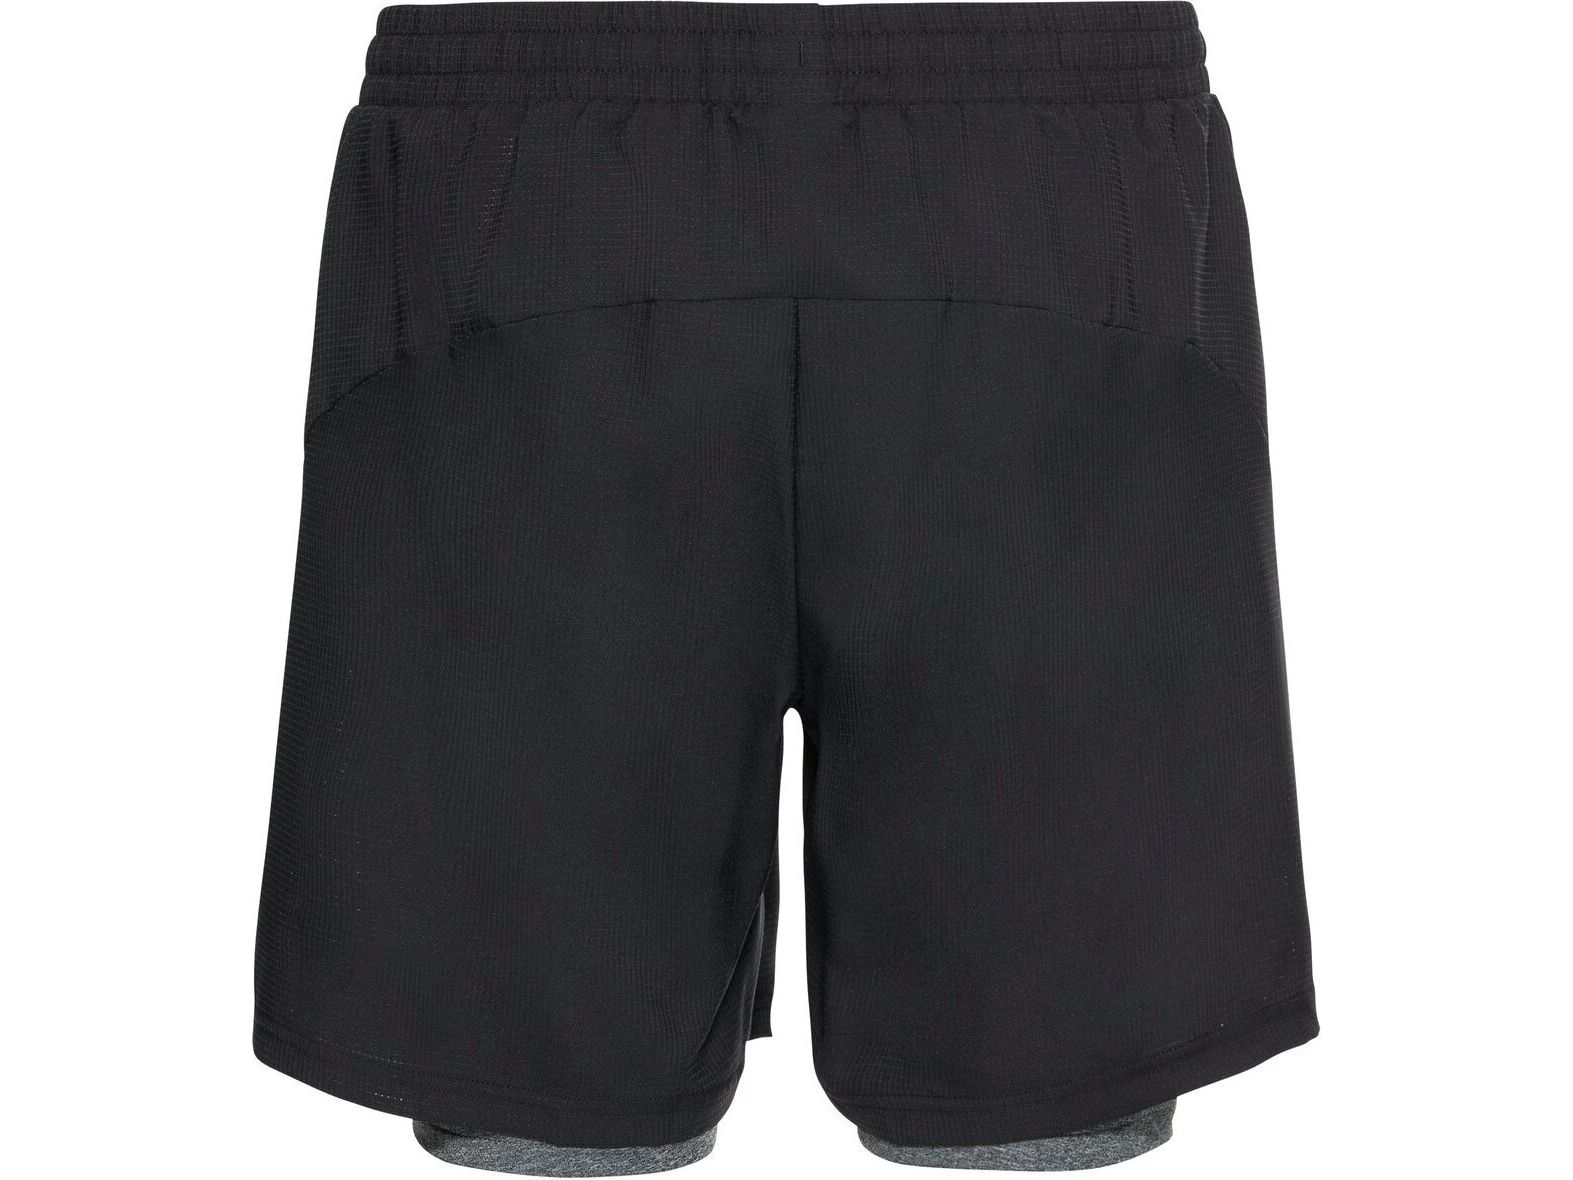 odlo-run-easy-7-inch-shorts-herren